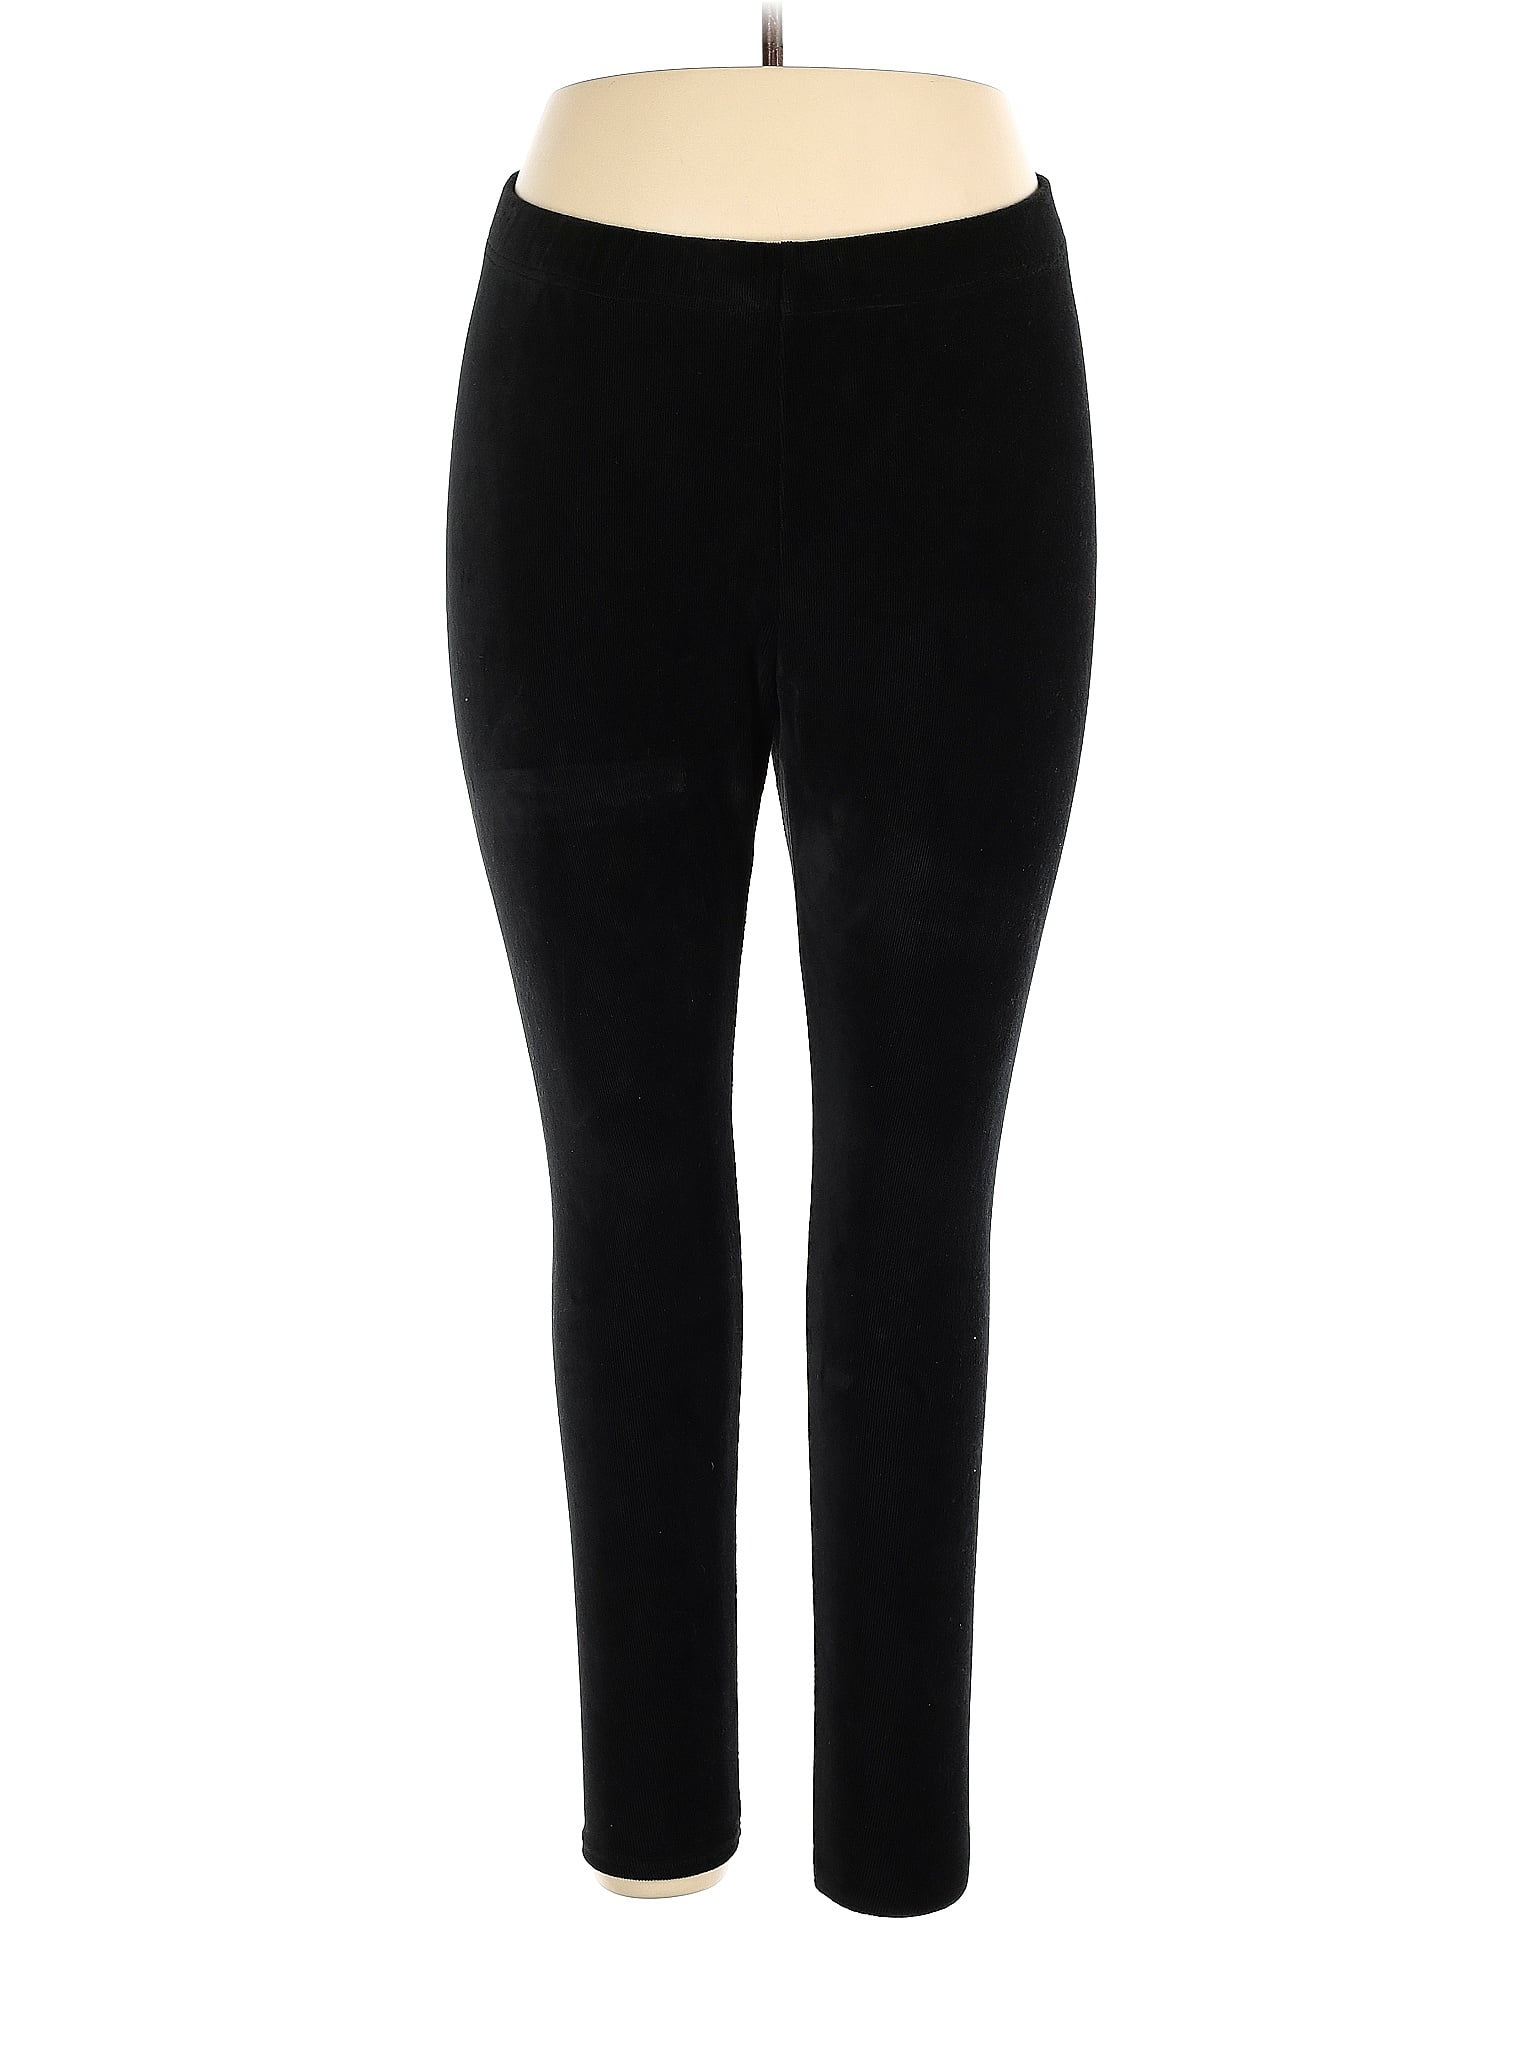 J.Jill Black Casual Pants Size 1X (Plus) - 72% off